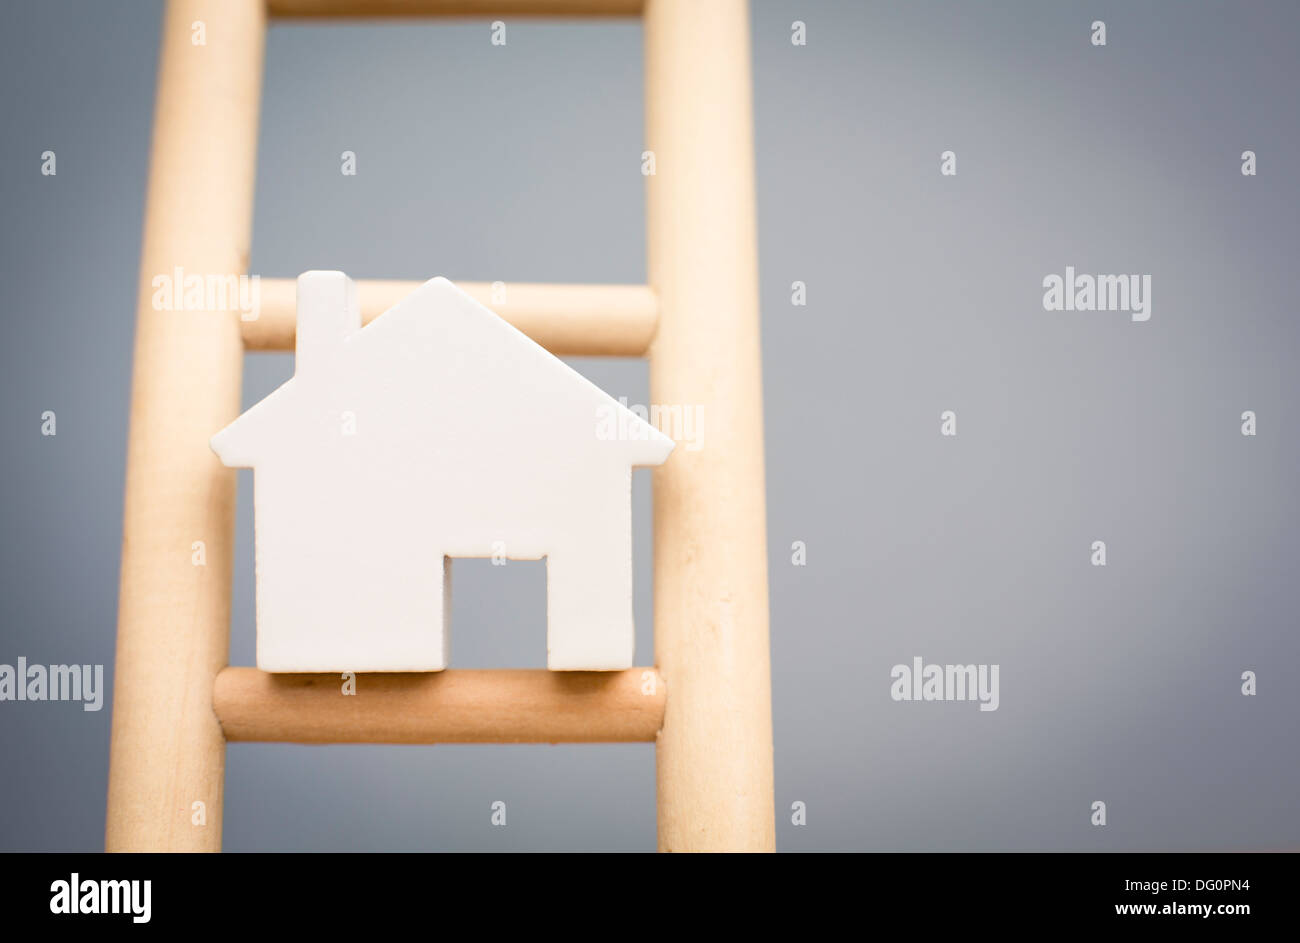 Concept Image To Illustrate Housing Market Stock Photo